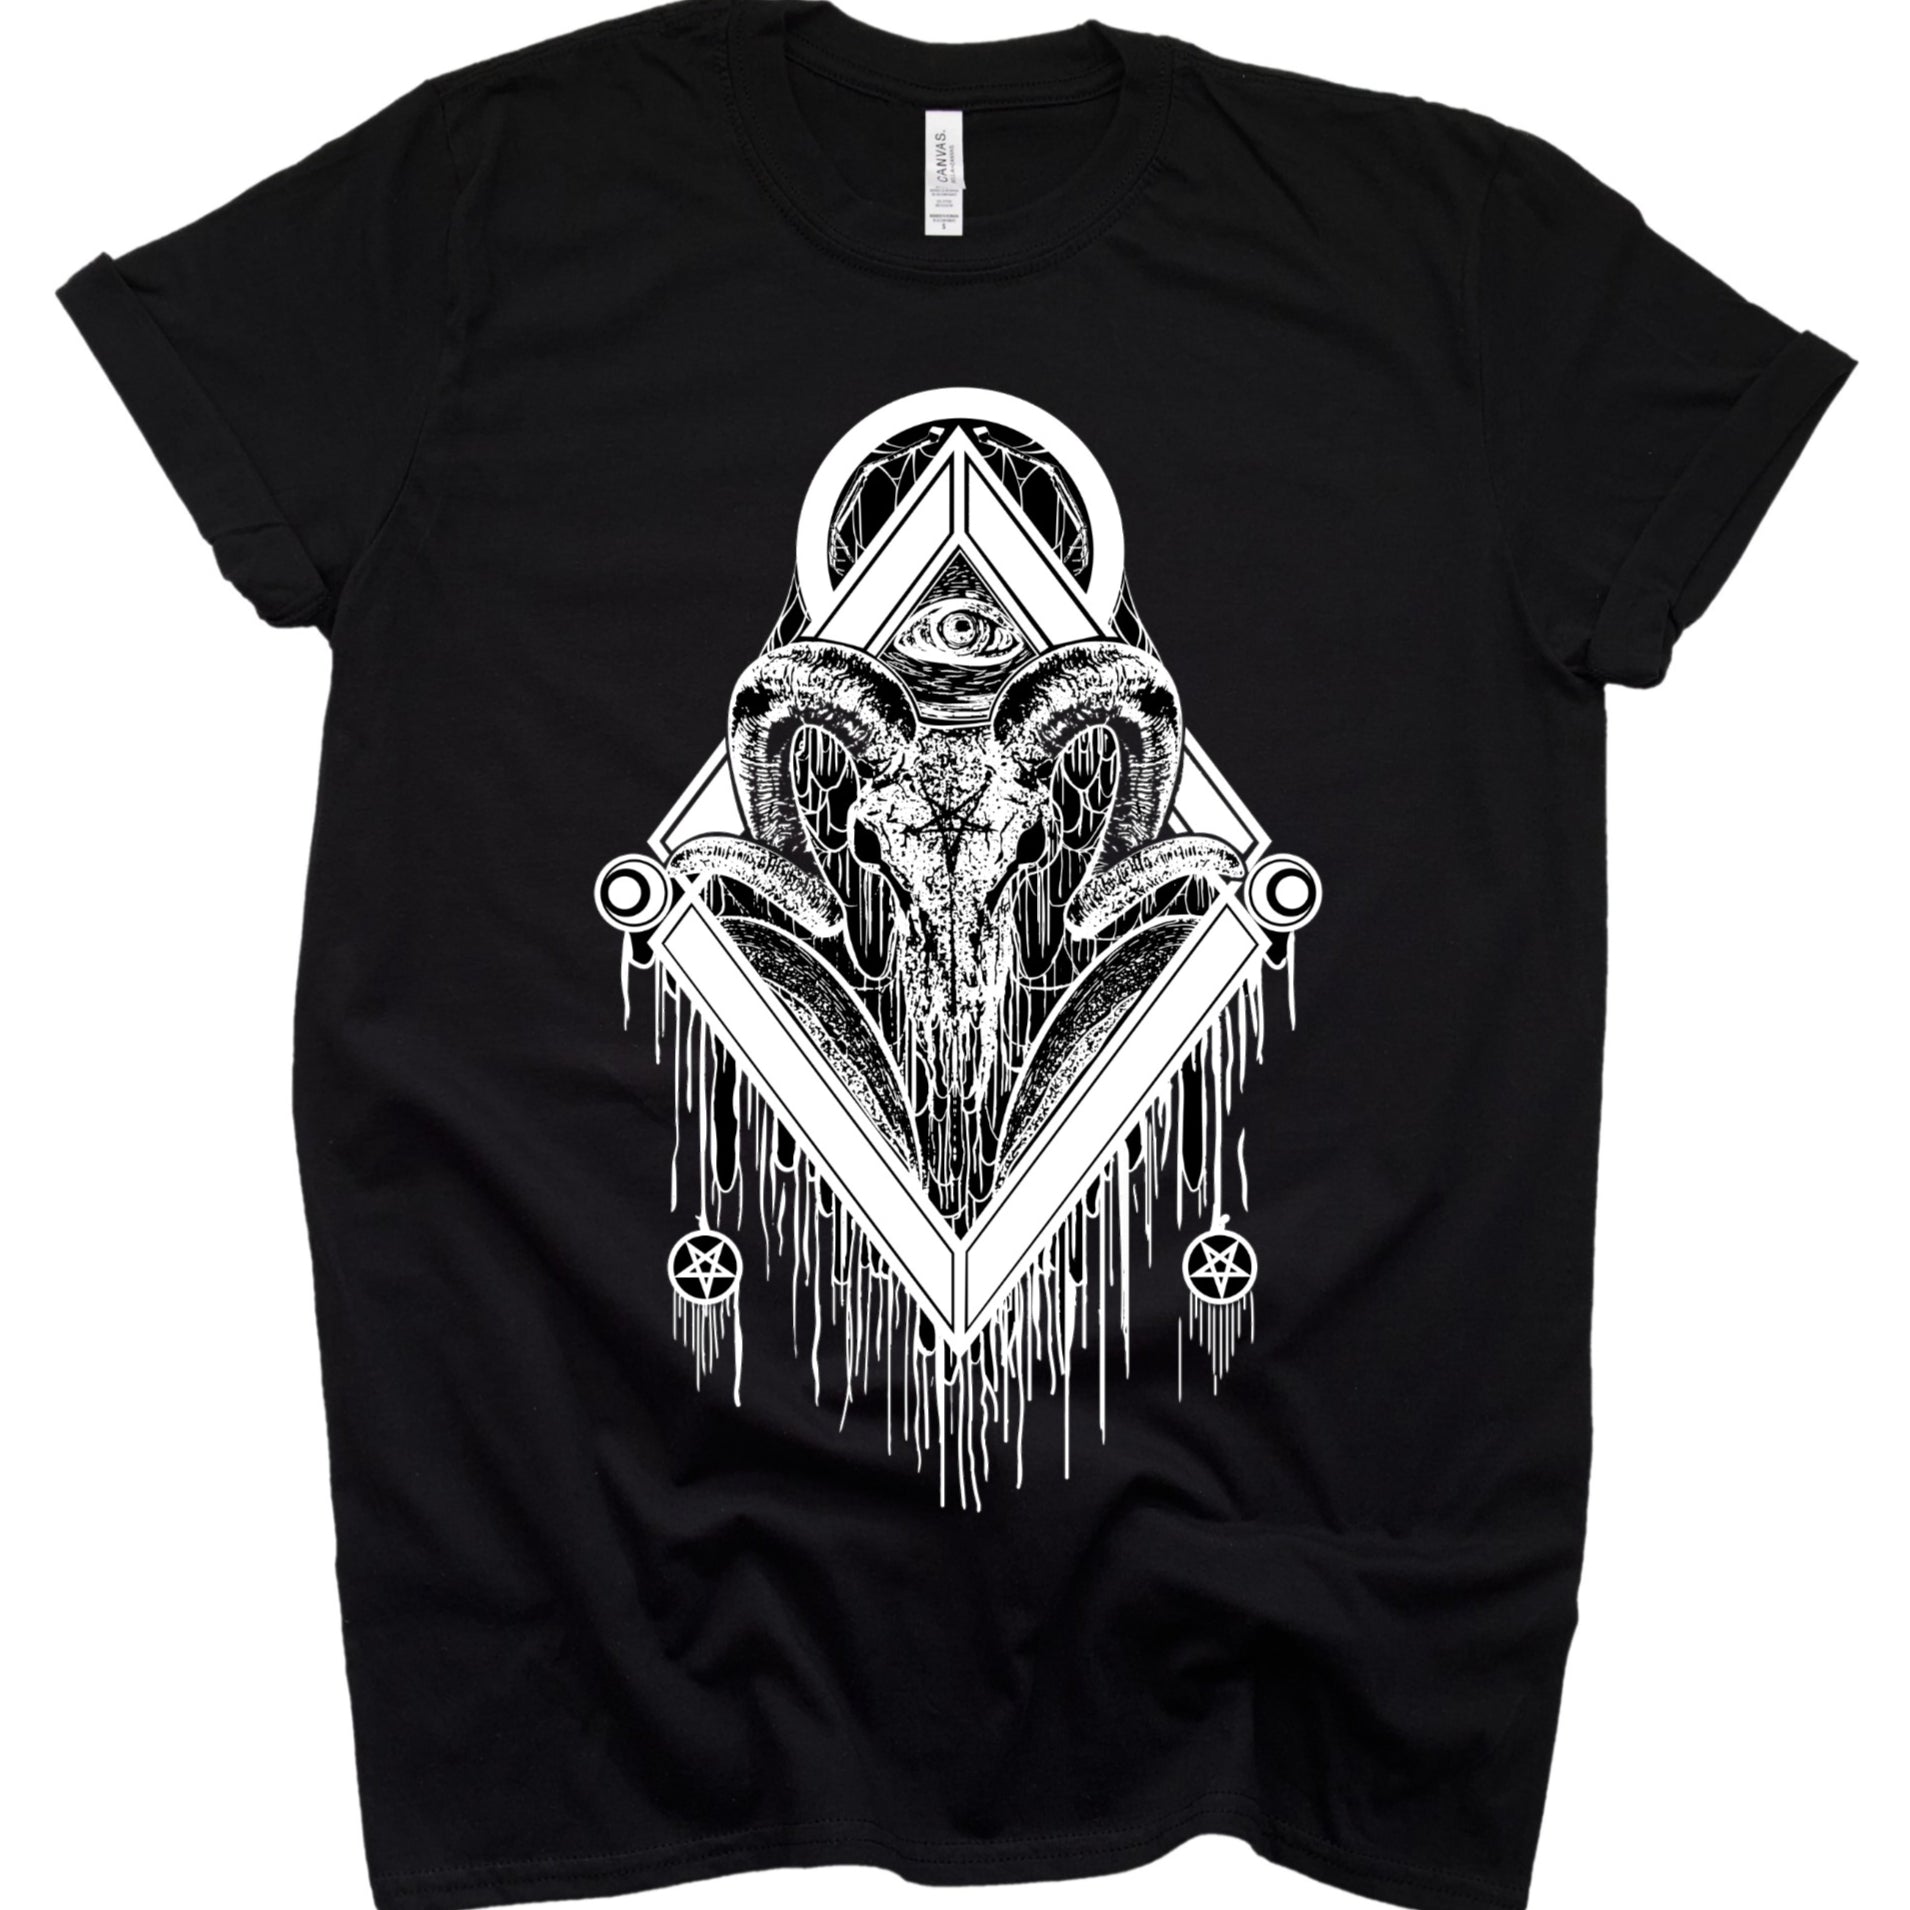 Occult t-shirt